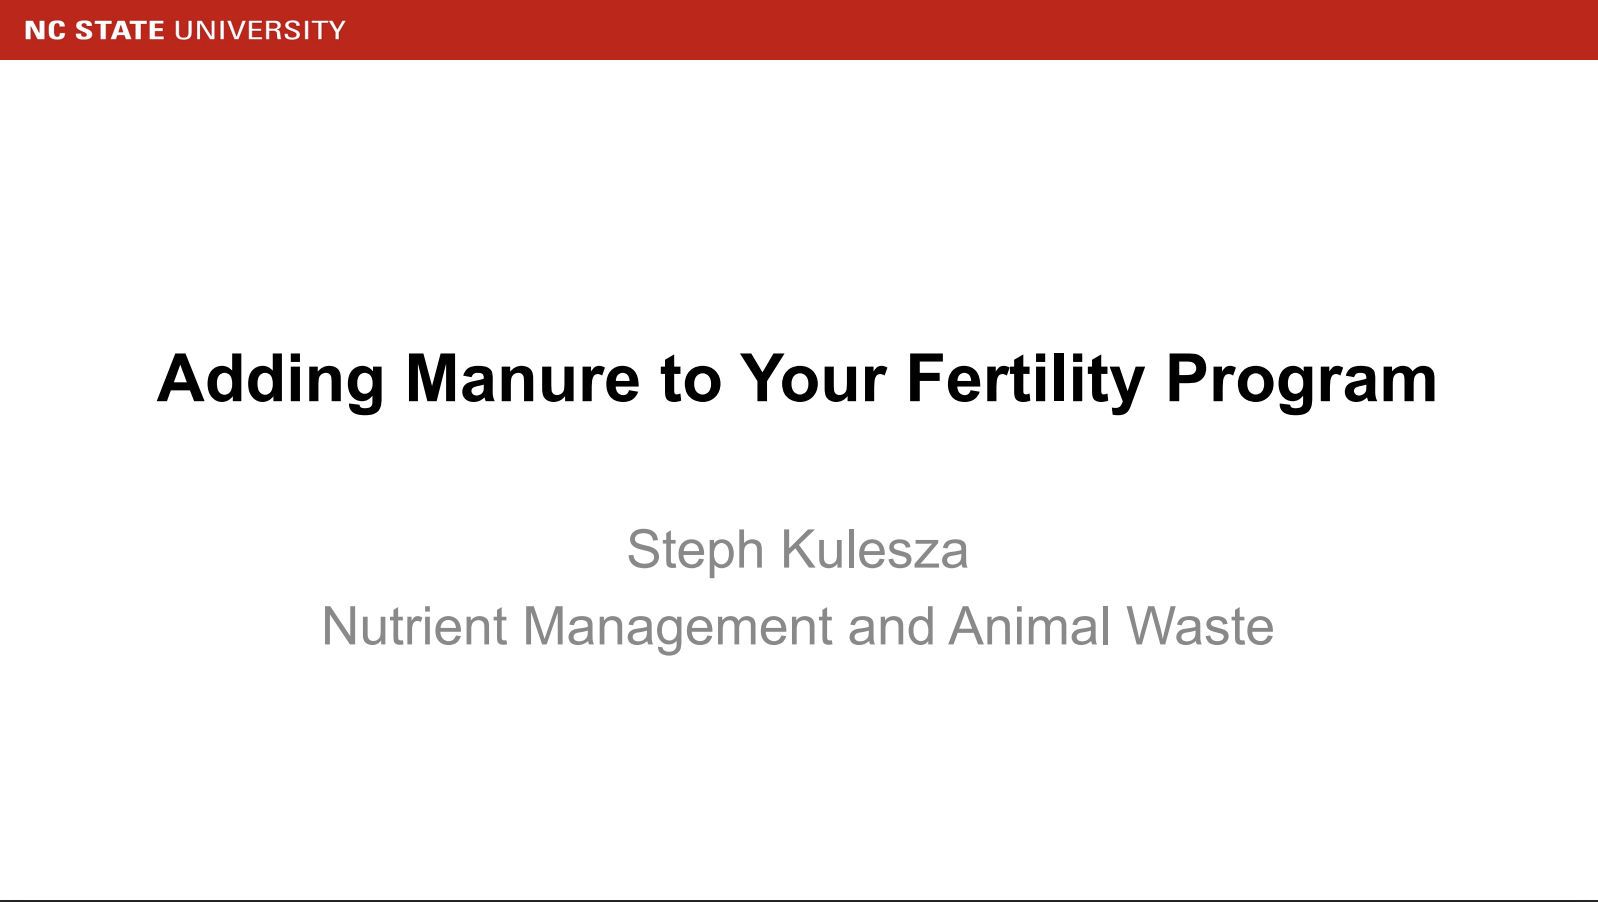 Adding Manure to Your Fertility Program